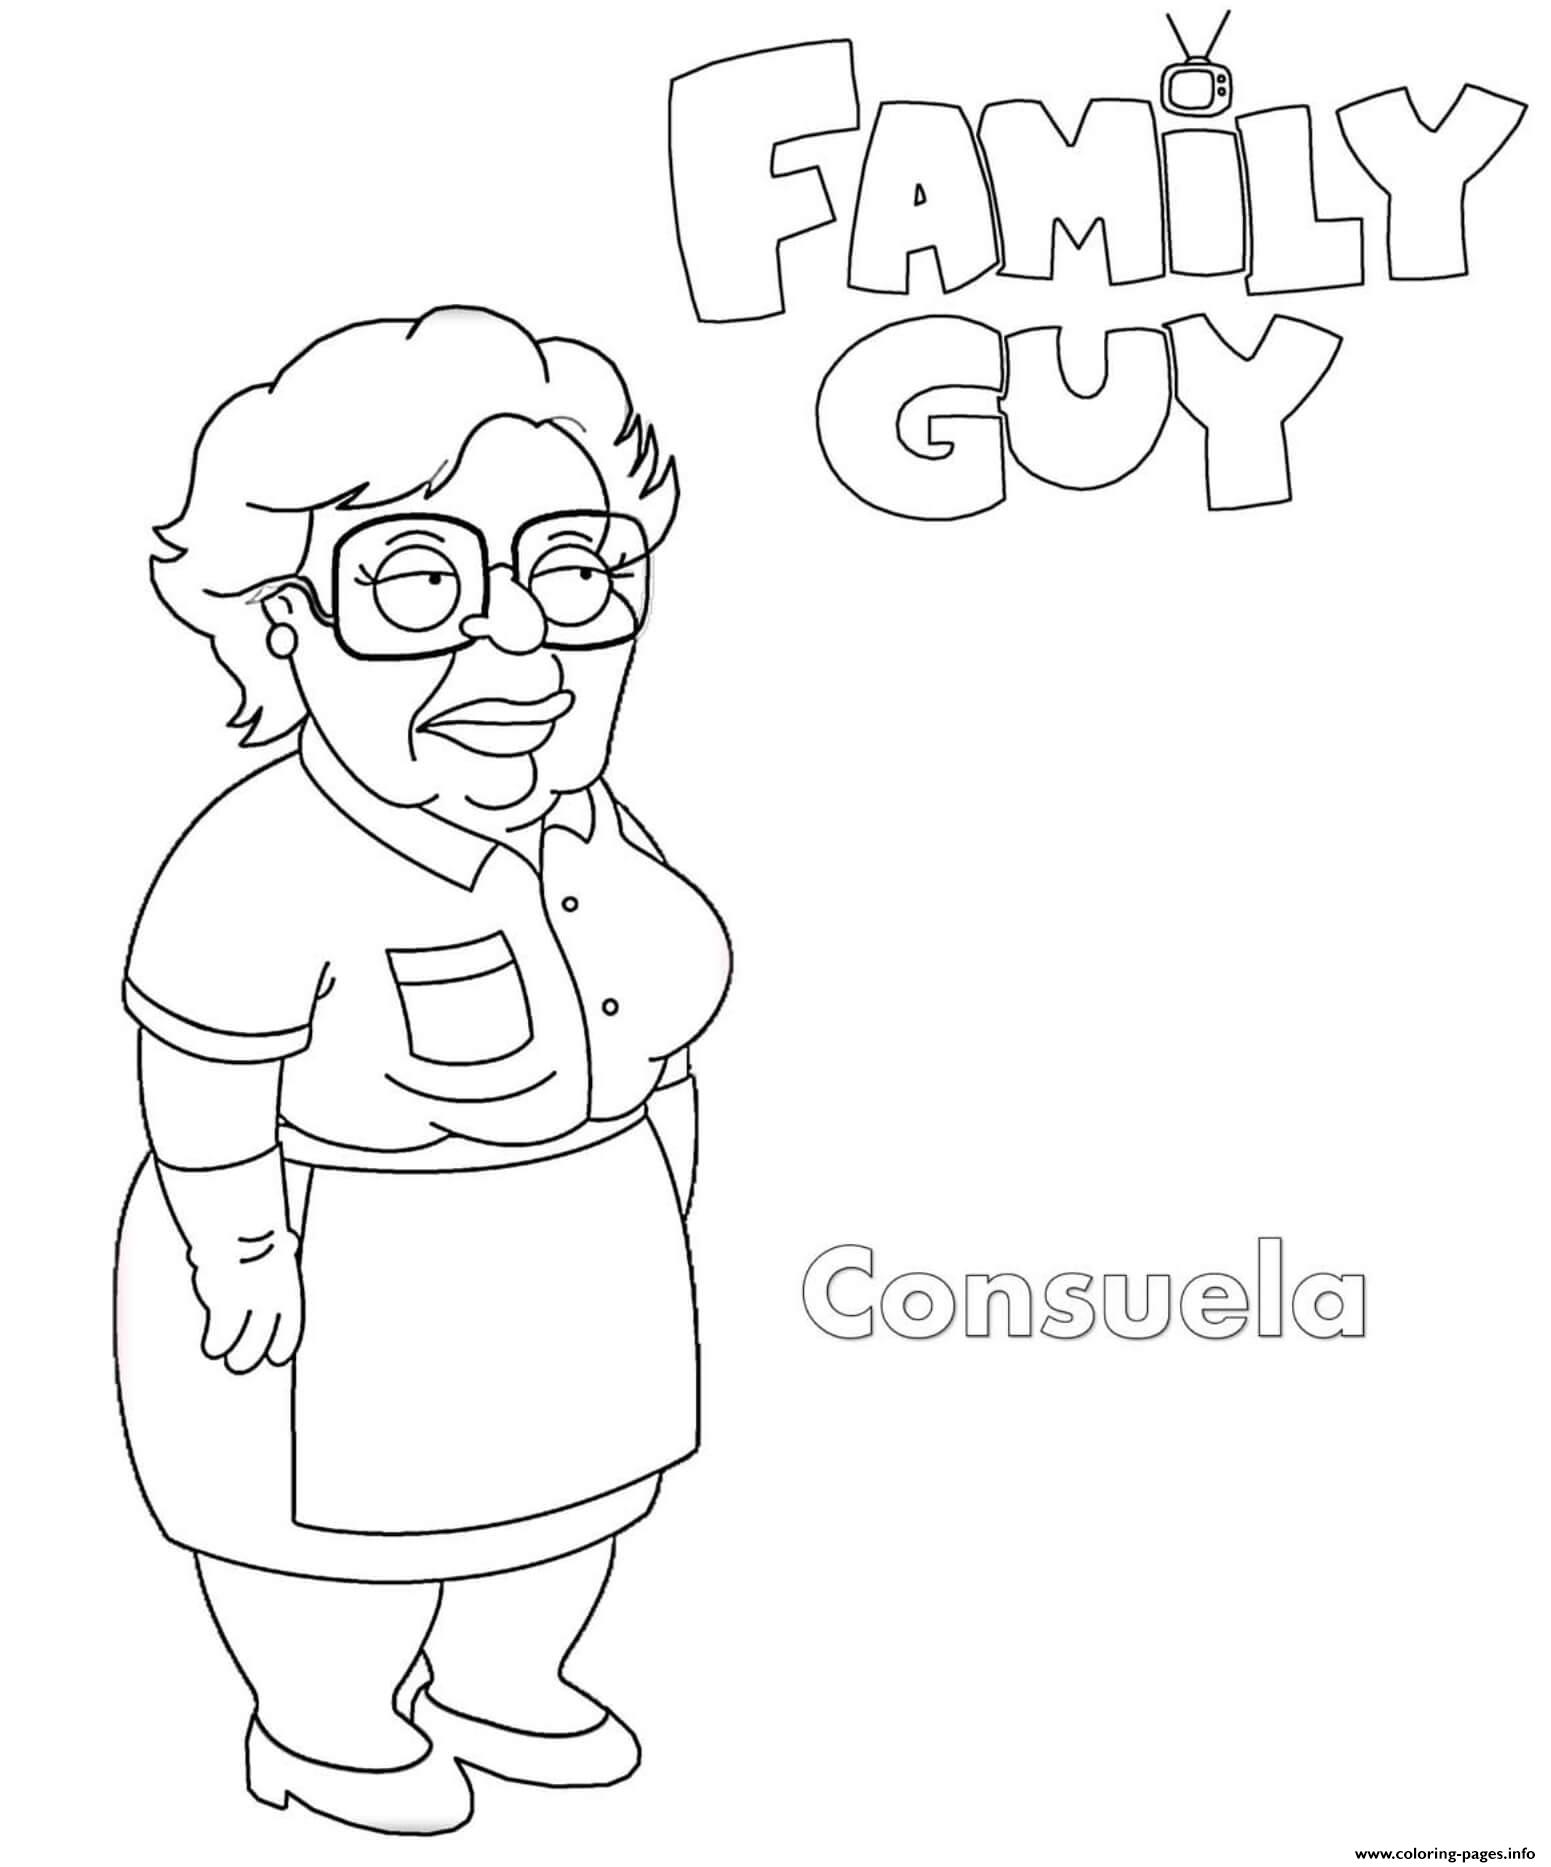 Family Guy Consuela coloring